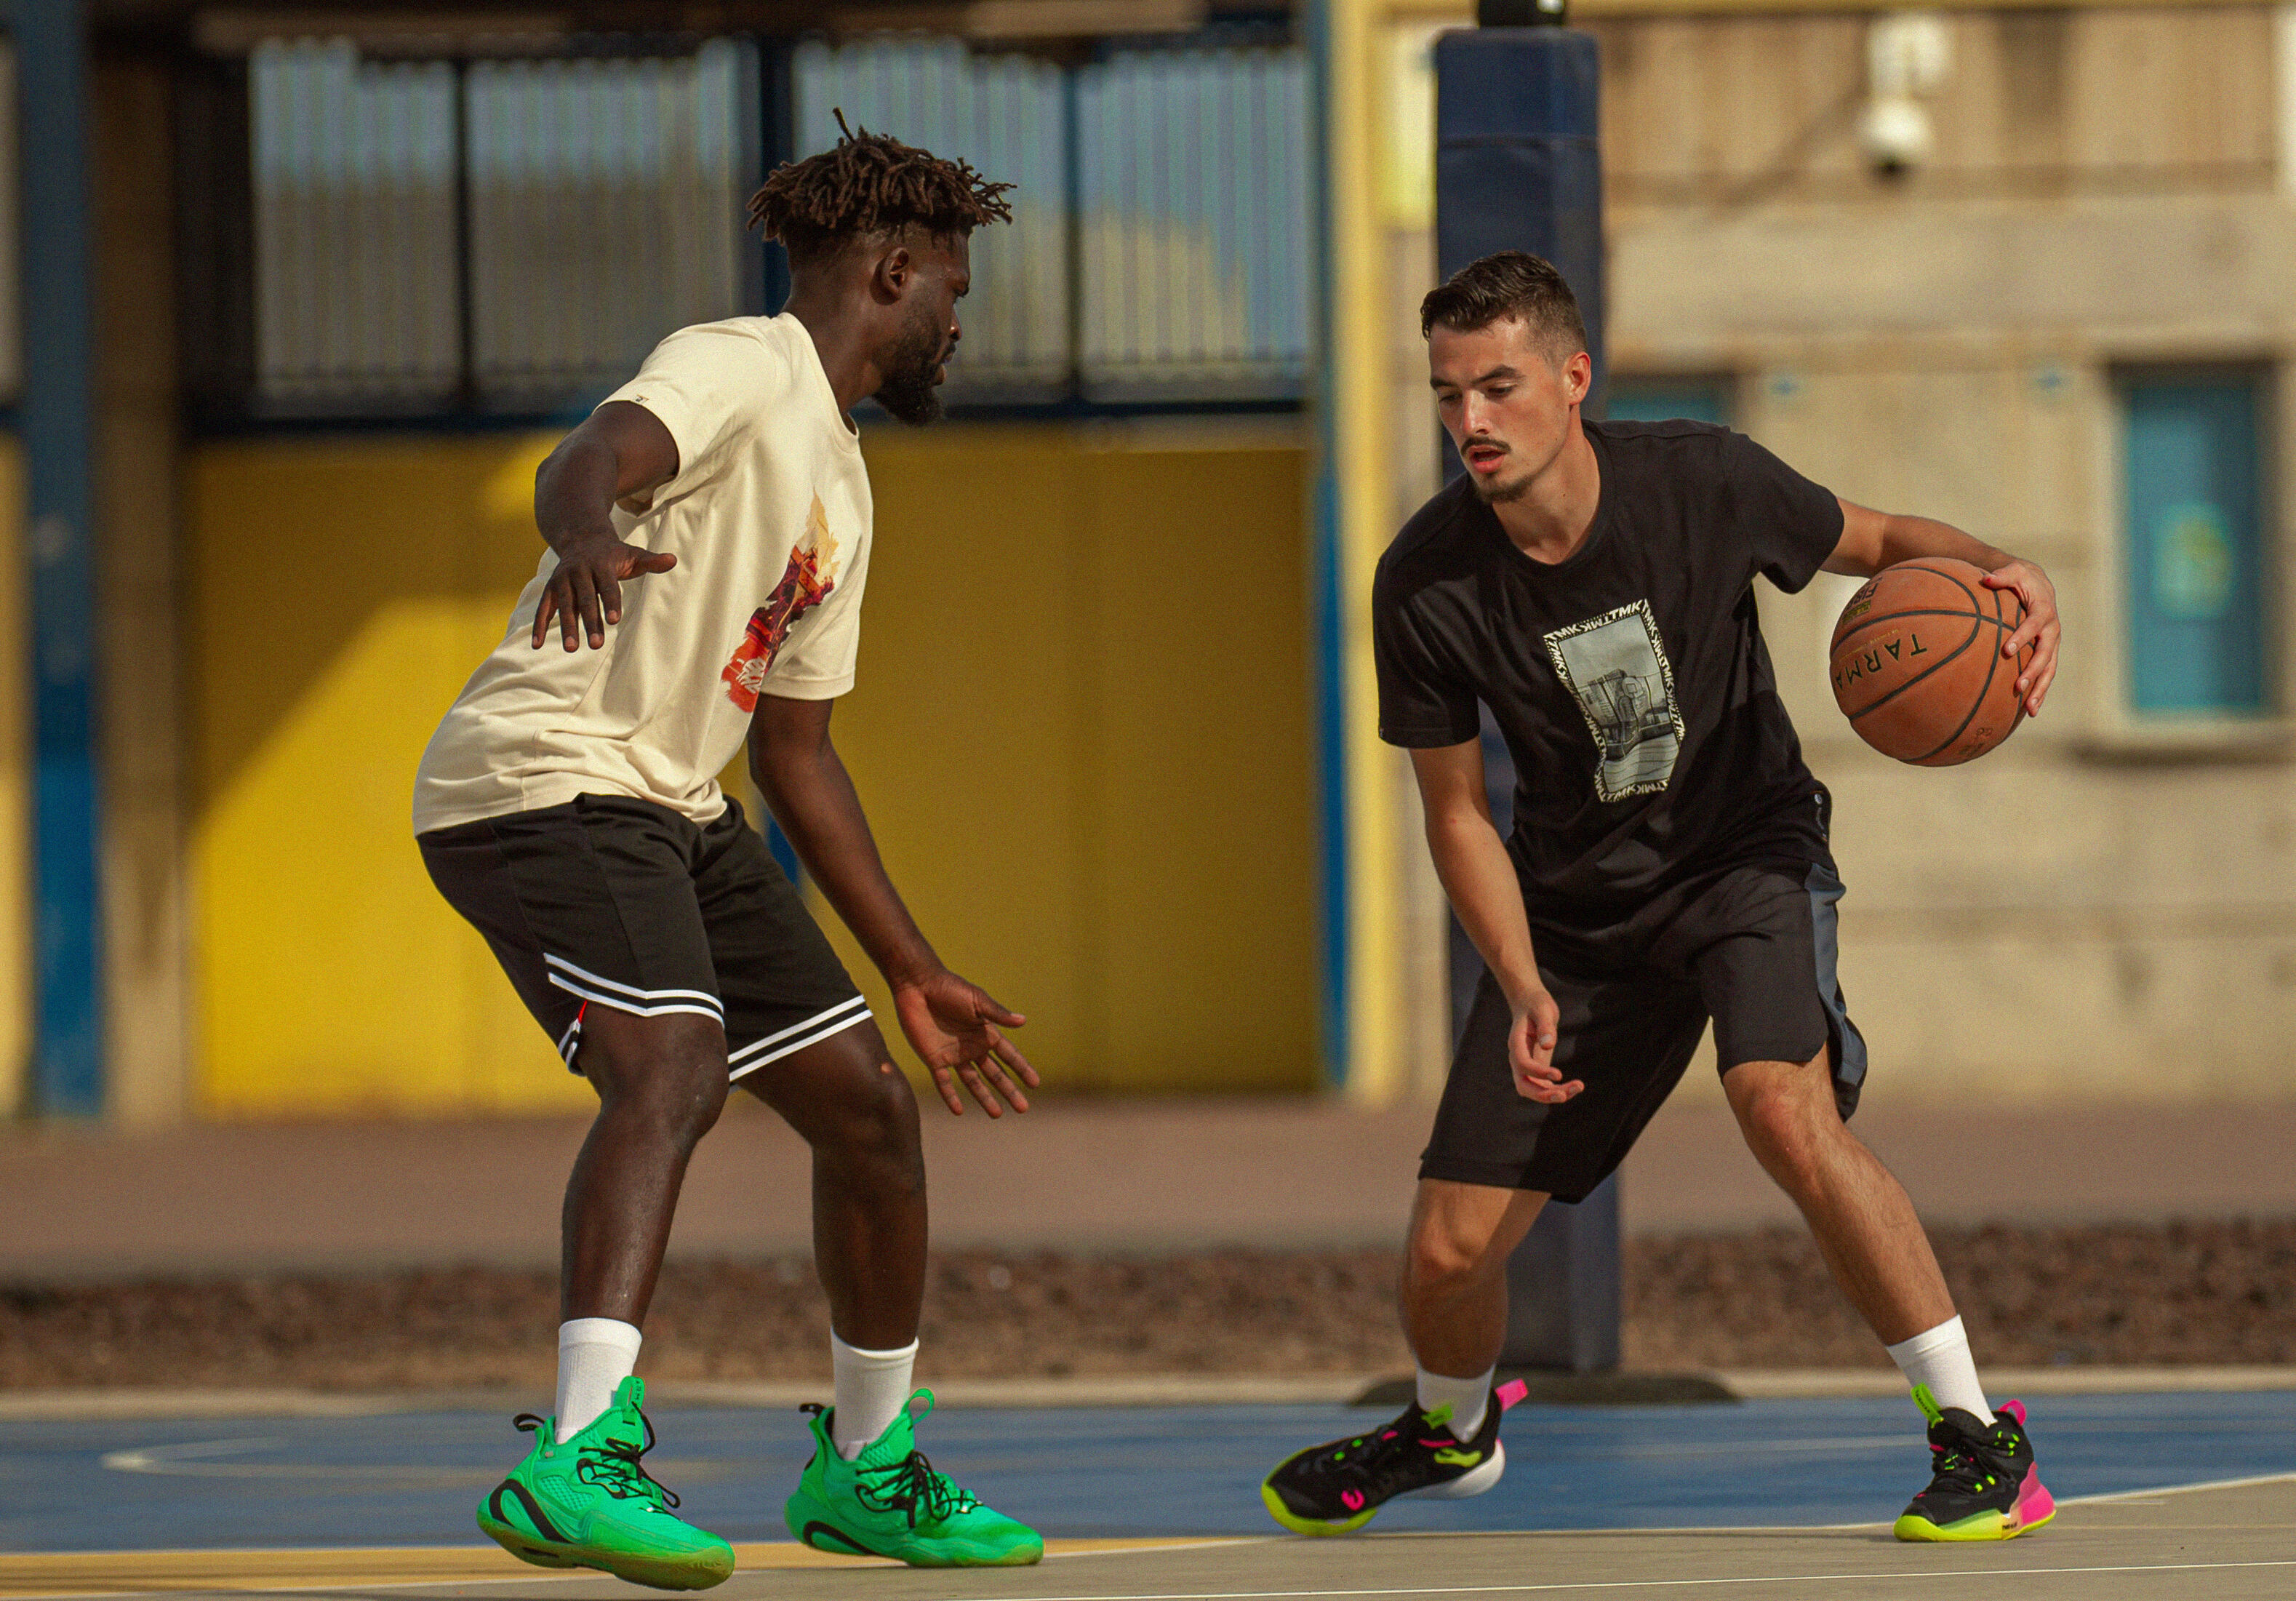 Boys' Basketball Shorts - All In Motion™ Onyx Black XS